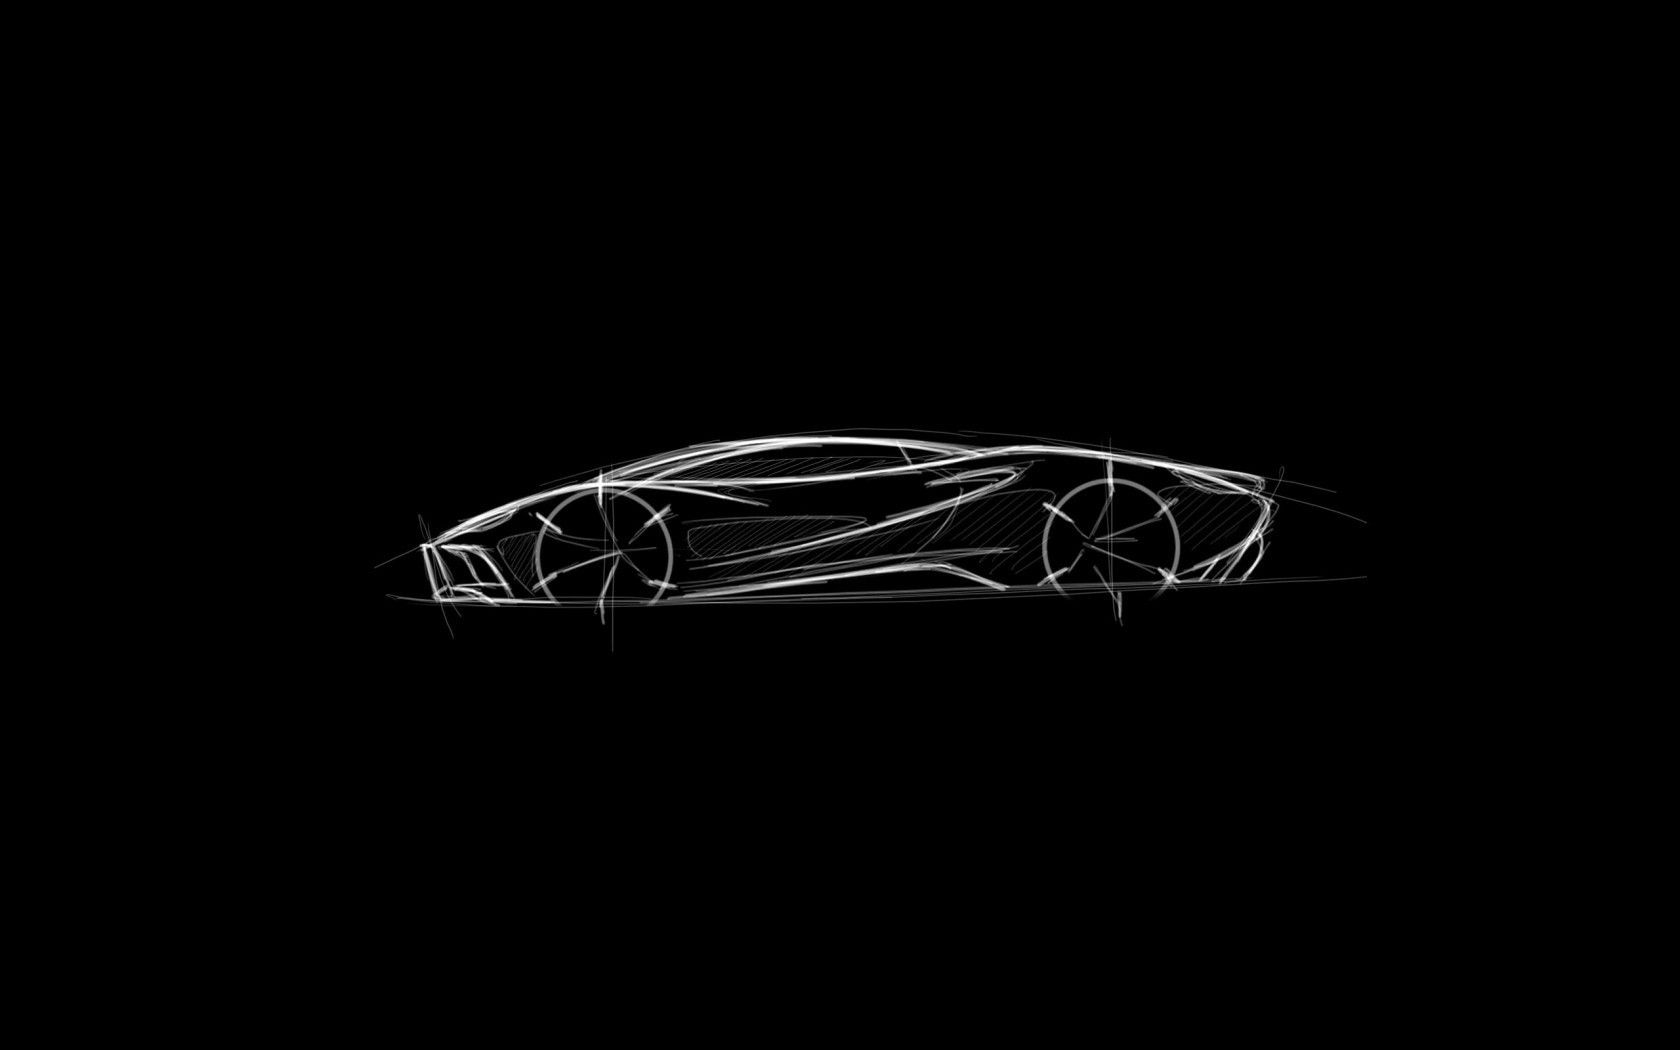 1680x1050 digital art minimalism black background sports car car drawing sketches modern white monochrome wallpaper JPG 66 kB